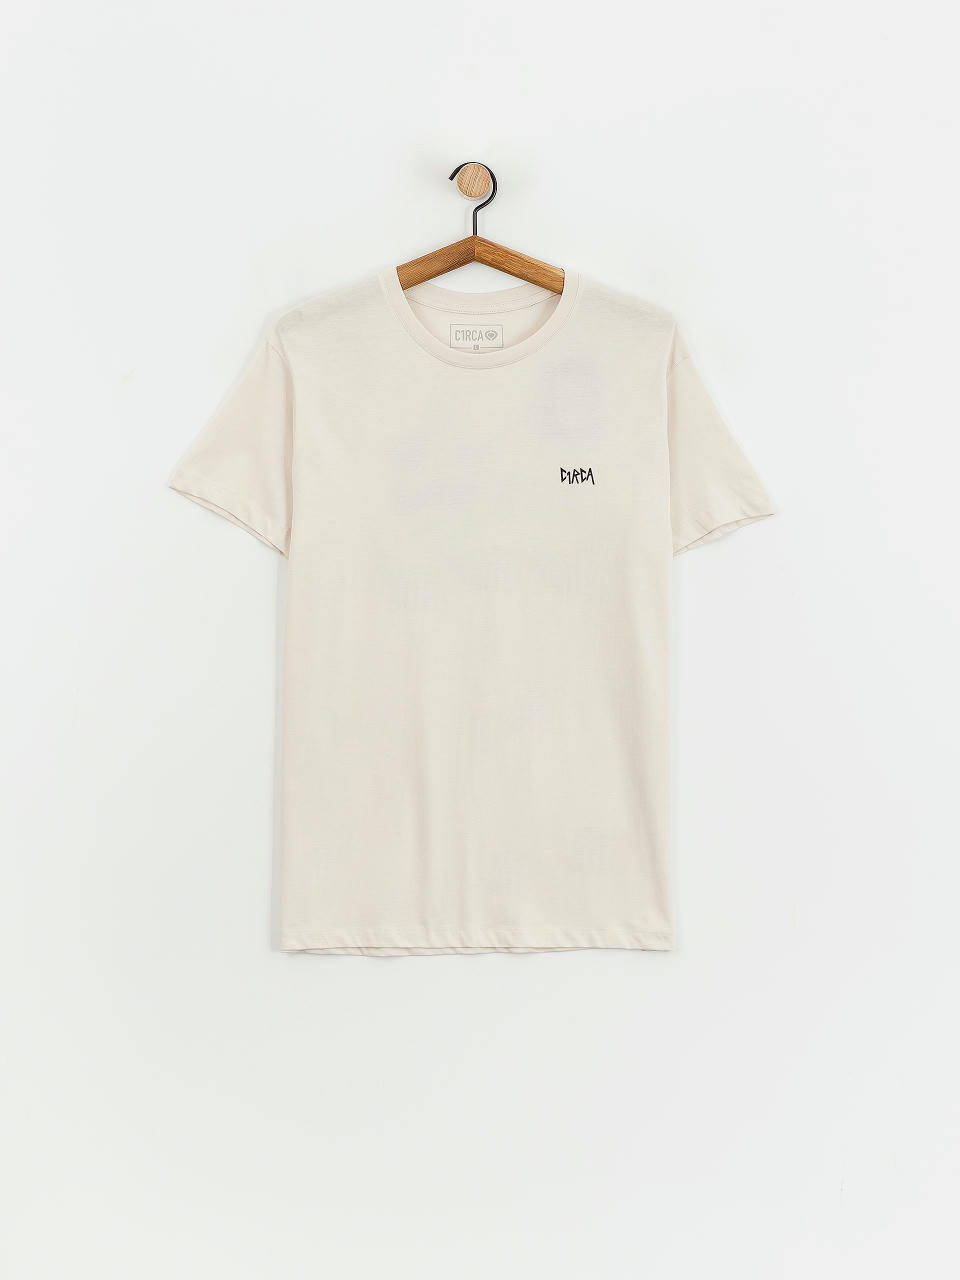 Circa T-Shirt Cherub (vintage white)